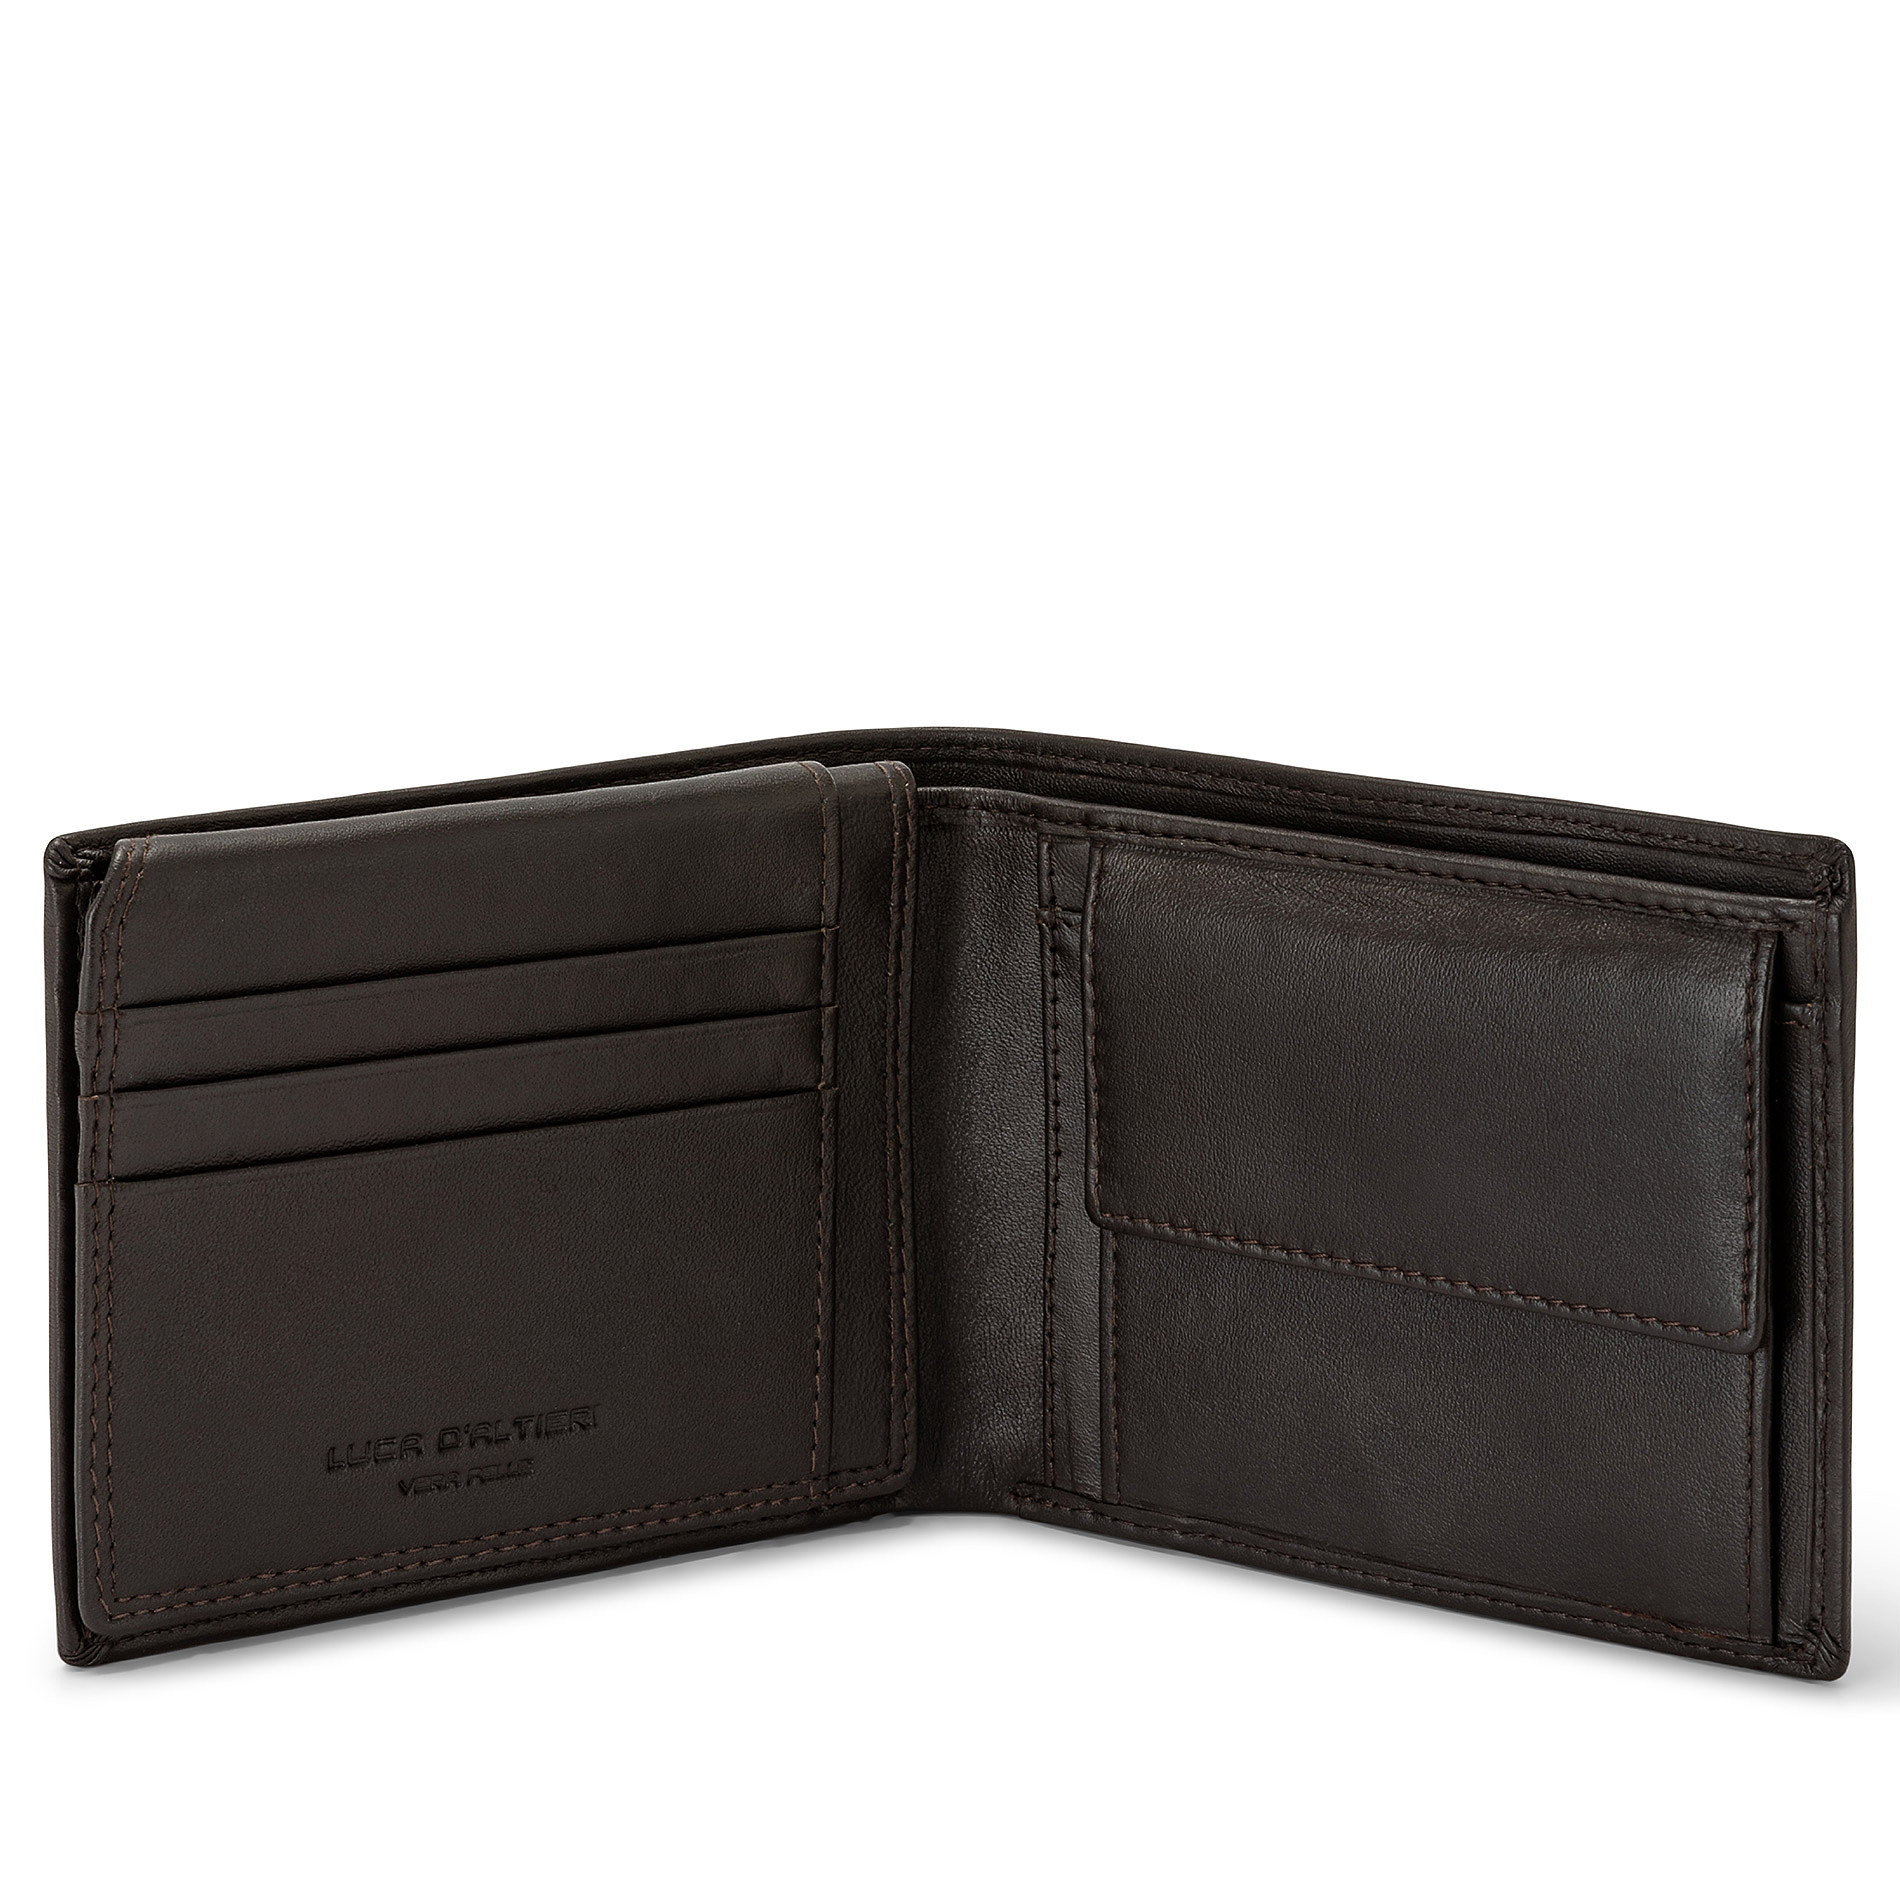 Luca D'Altieri leather wallet, Dark Brown, large image number 2